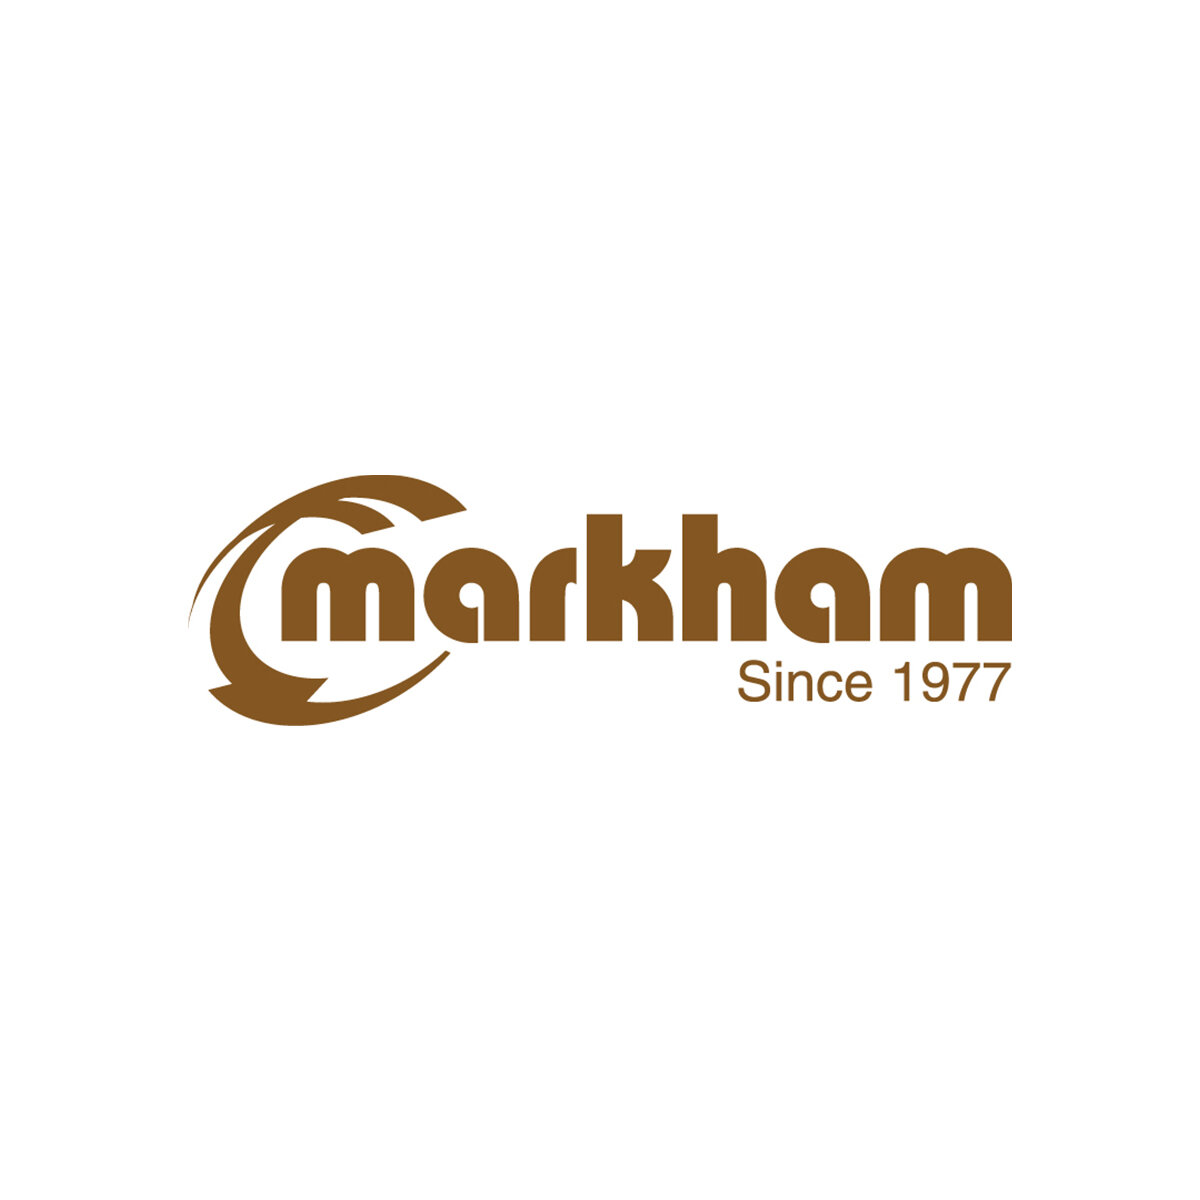 Markham logo.jpg